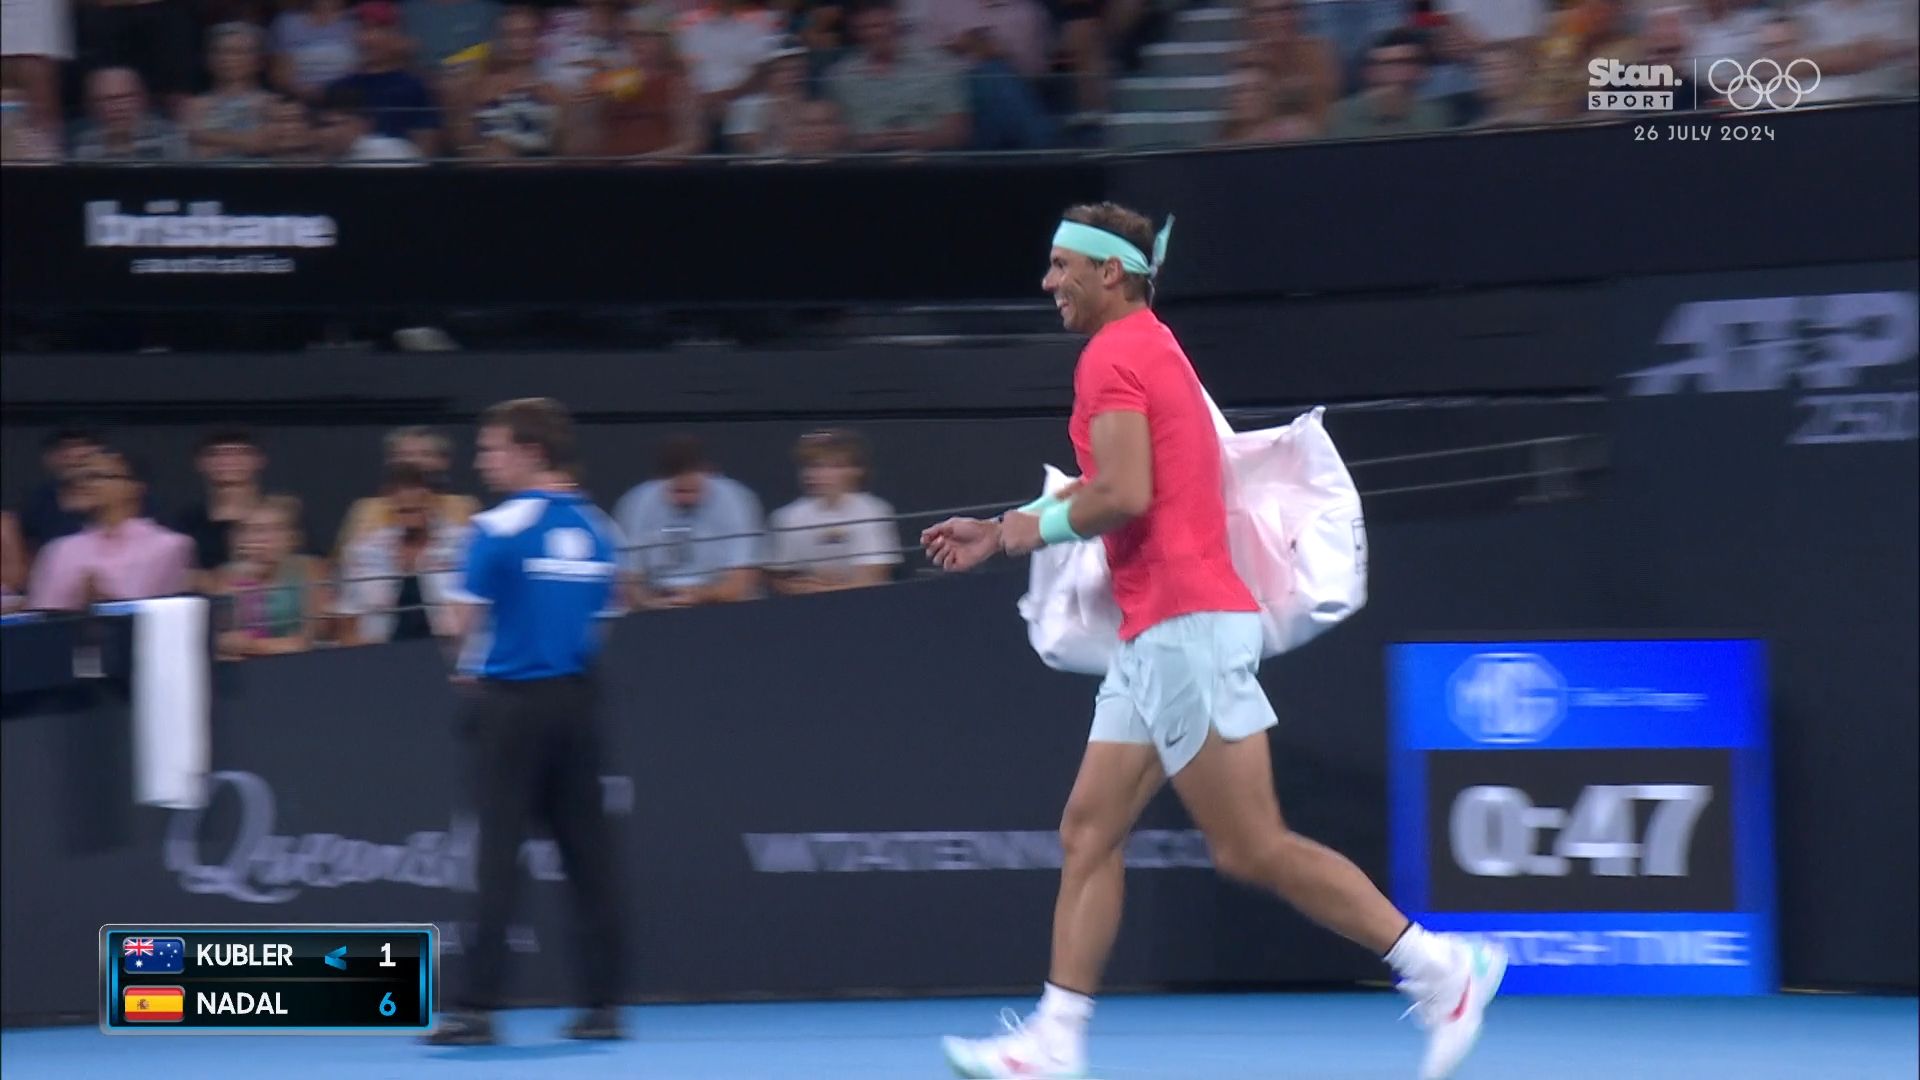 Rafael Nadal receives time violation at Brisbane International for lengthy toilet break